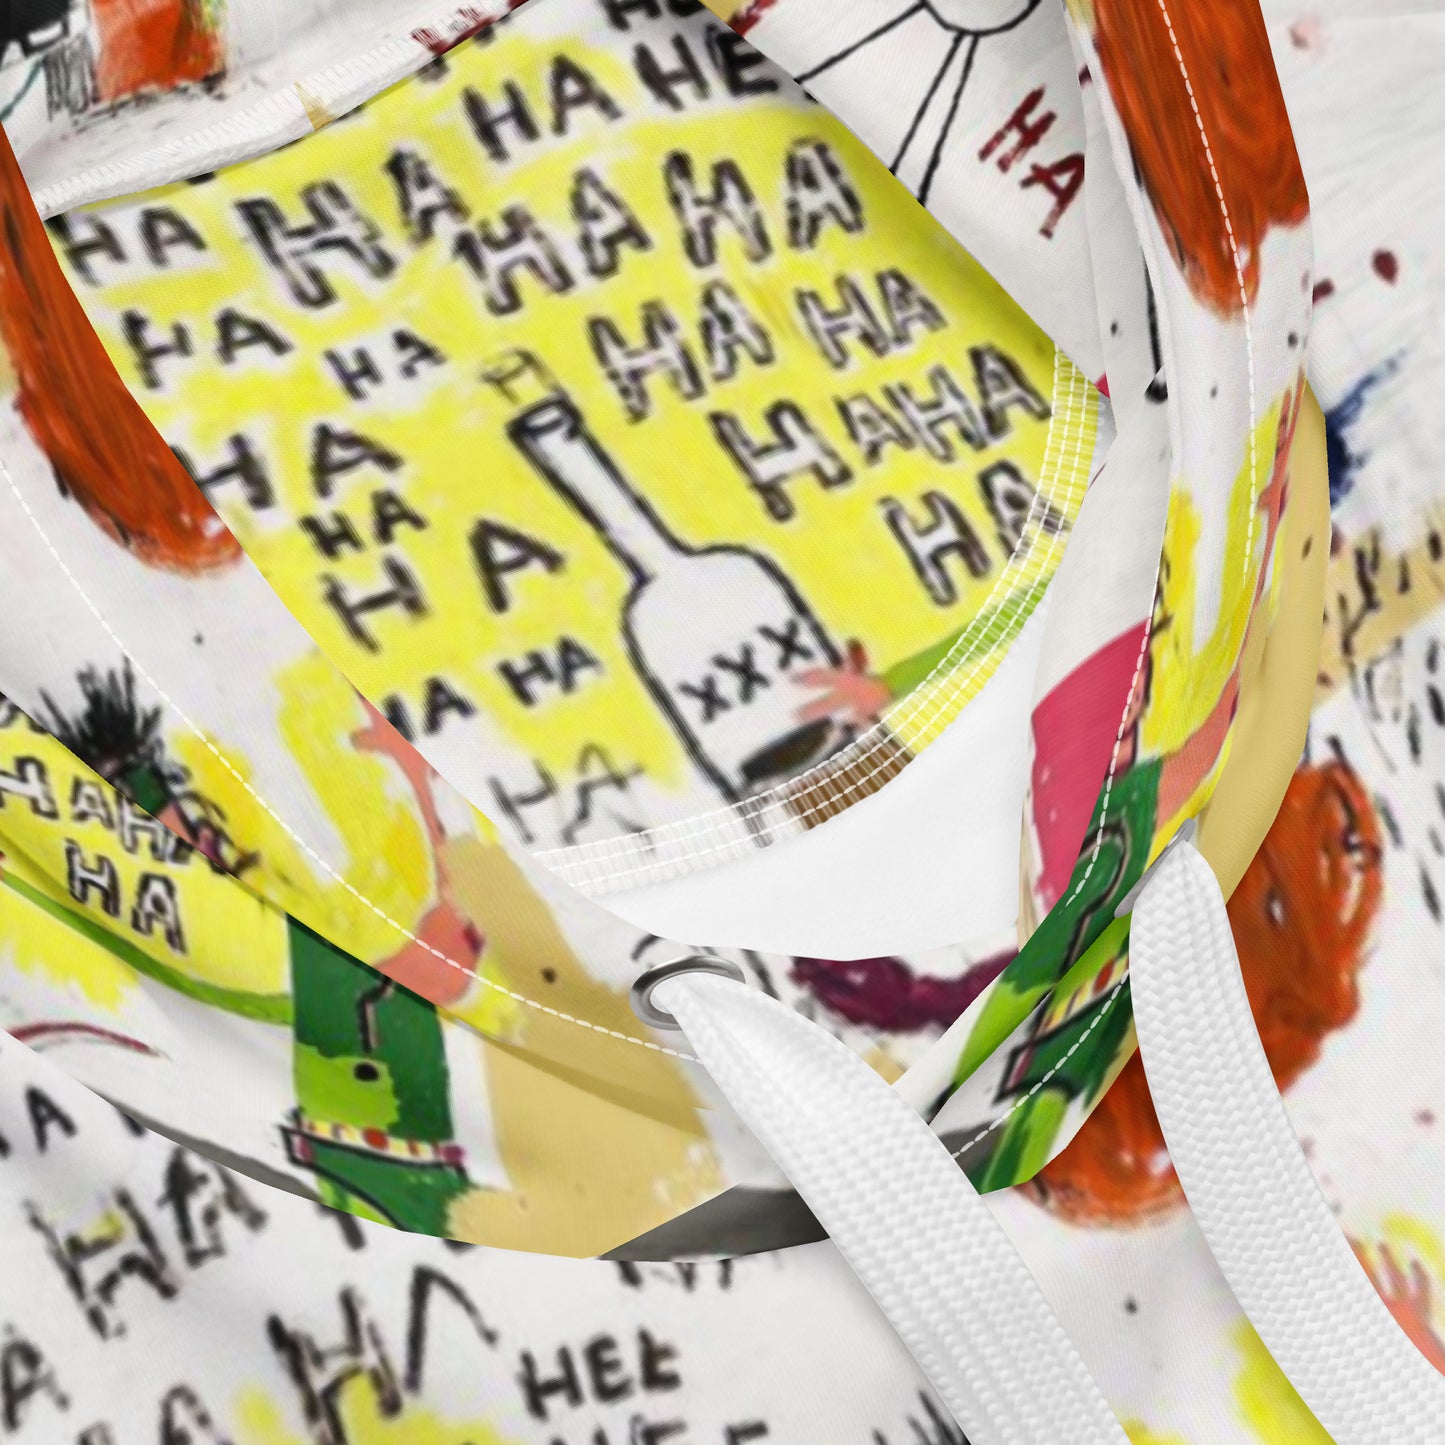 Jean-Michel Basquiat "Riddle Me This Batman" Artwork All Over Printed White Sweatshirt Hoodie Scattered Streetwear